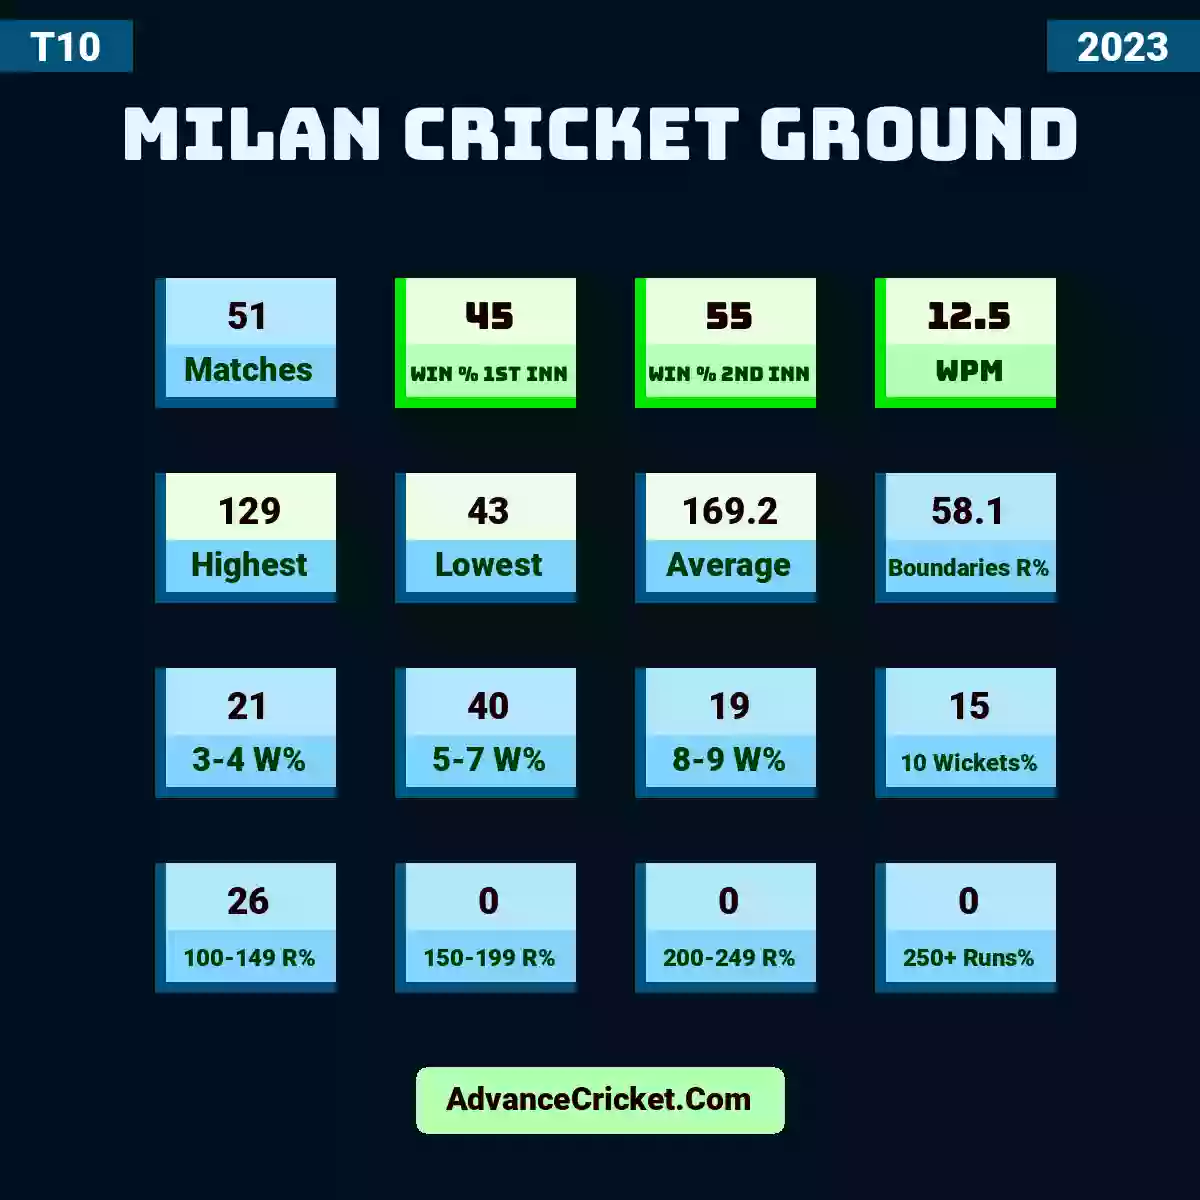 Image showing Milan Cricket Ground with Matches: 51, Win % 1st Inn: 45, Win % 2nd Inn: 55, WPM: 12.5, Highest: 129, Lowest: 43, Average: 169.2, Boundaries R%: 58.1, 3-4 W%: 21, 5-7 W%: 40, 8-9 W%: 19, 10 Wickets%: 15, 100-149 R%: 26, 150-199 R%: 0, 200-249 R%: 0, 250+ Runs%: 0.